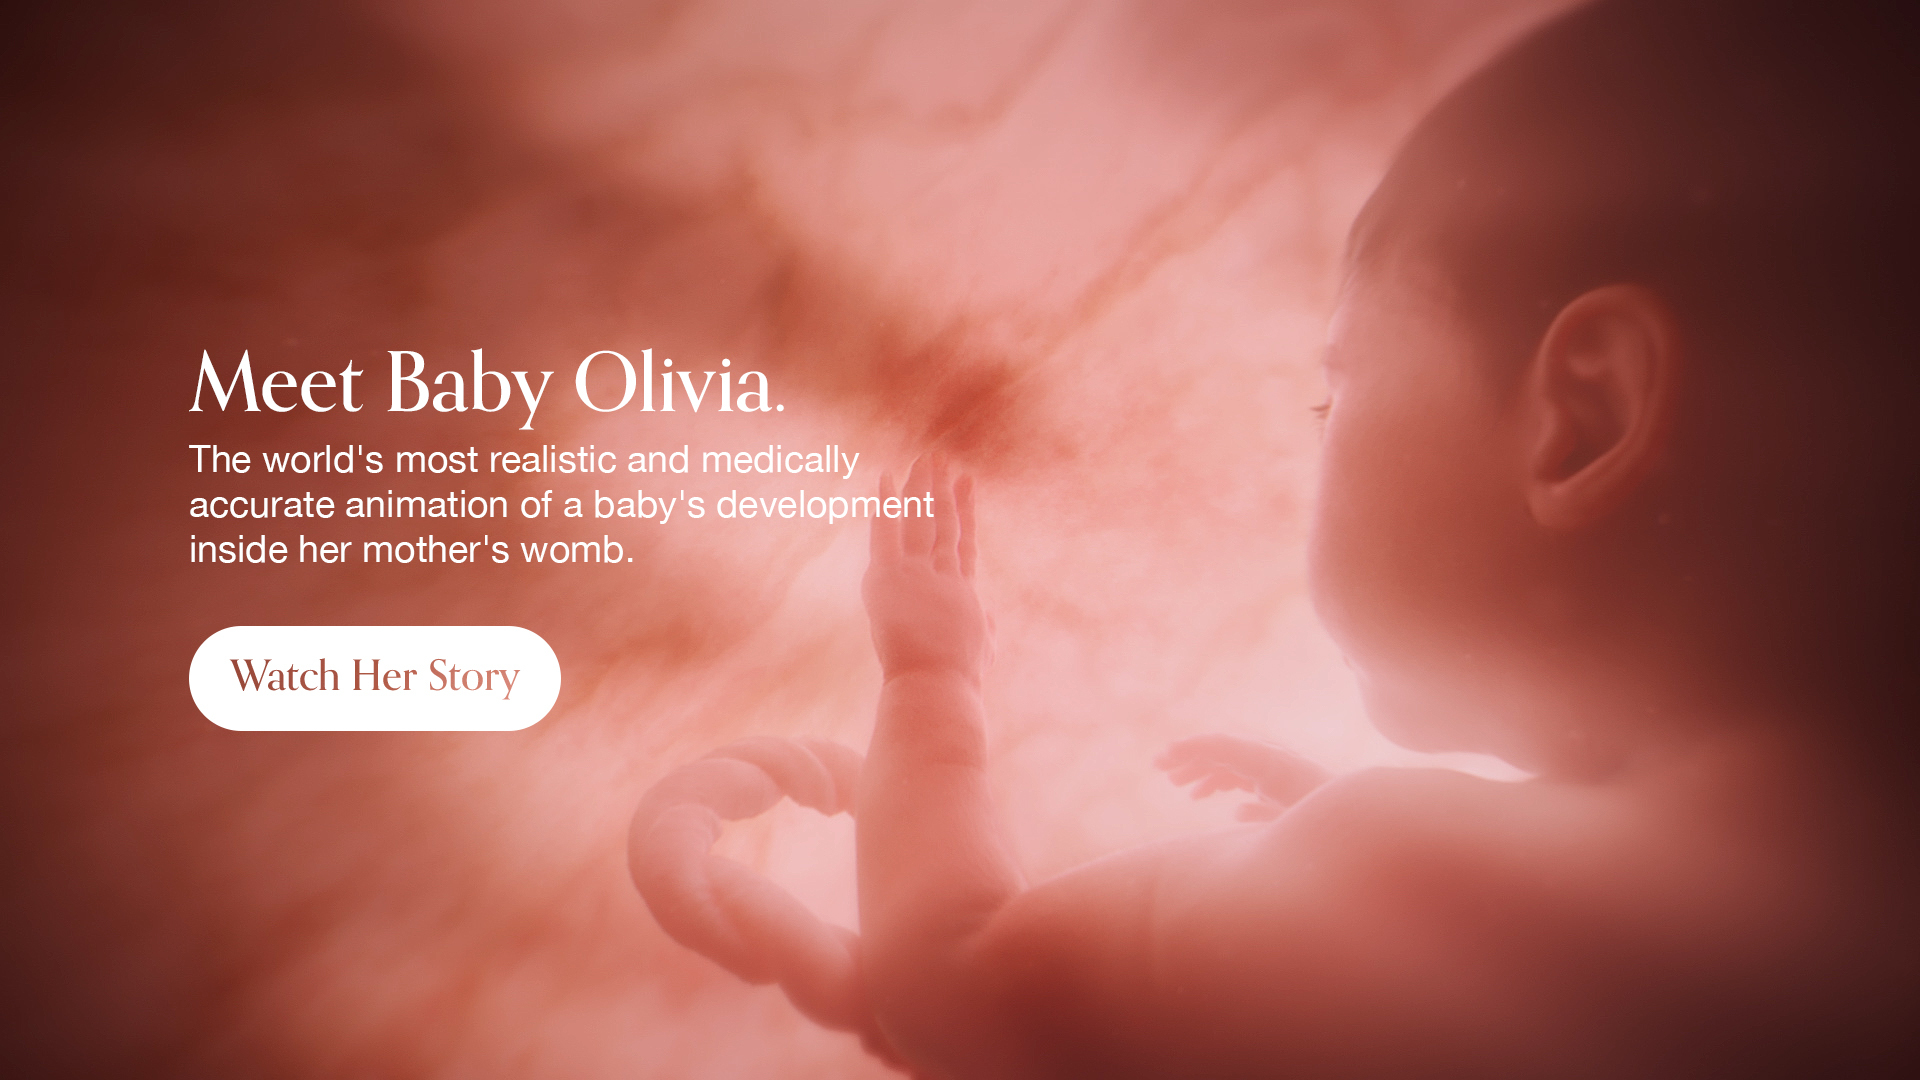 Interesting video showing fetal development